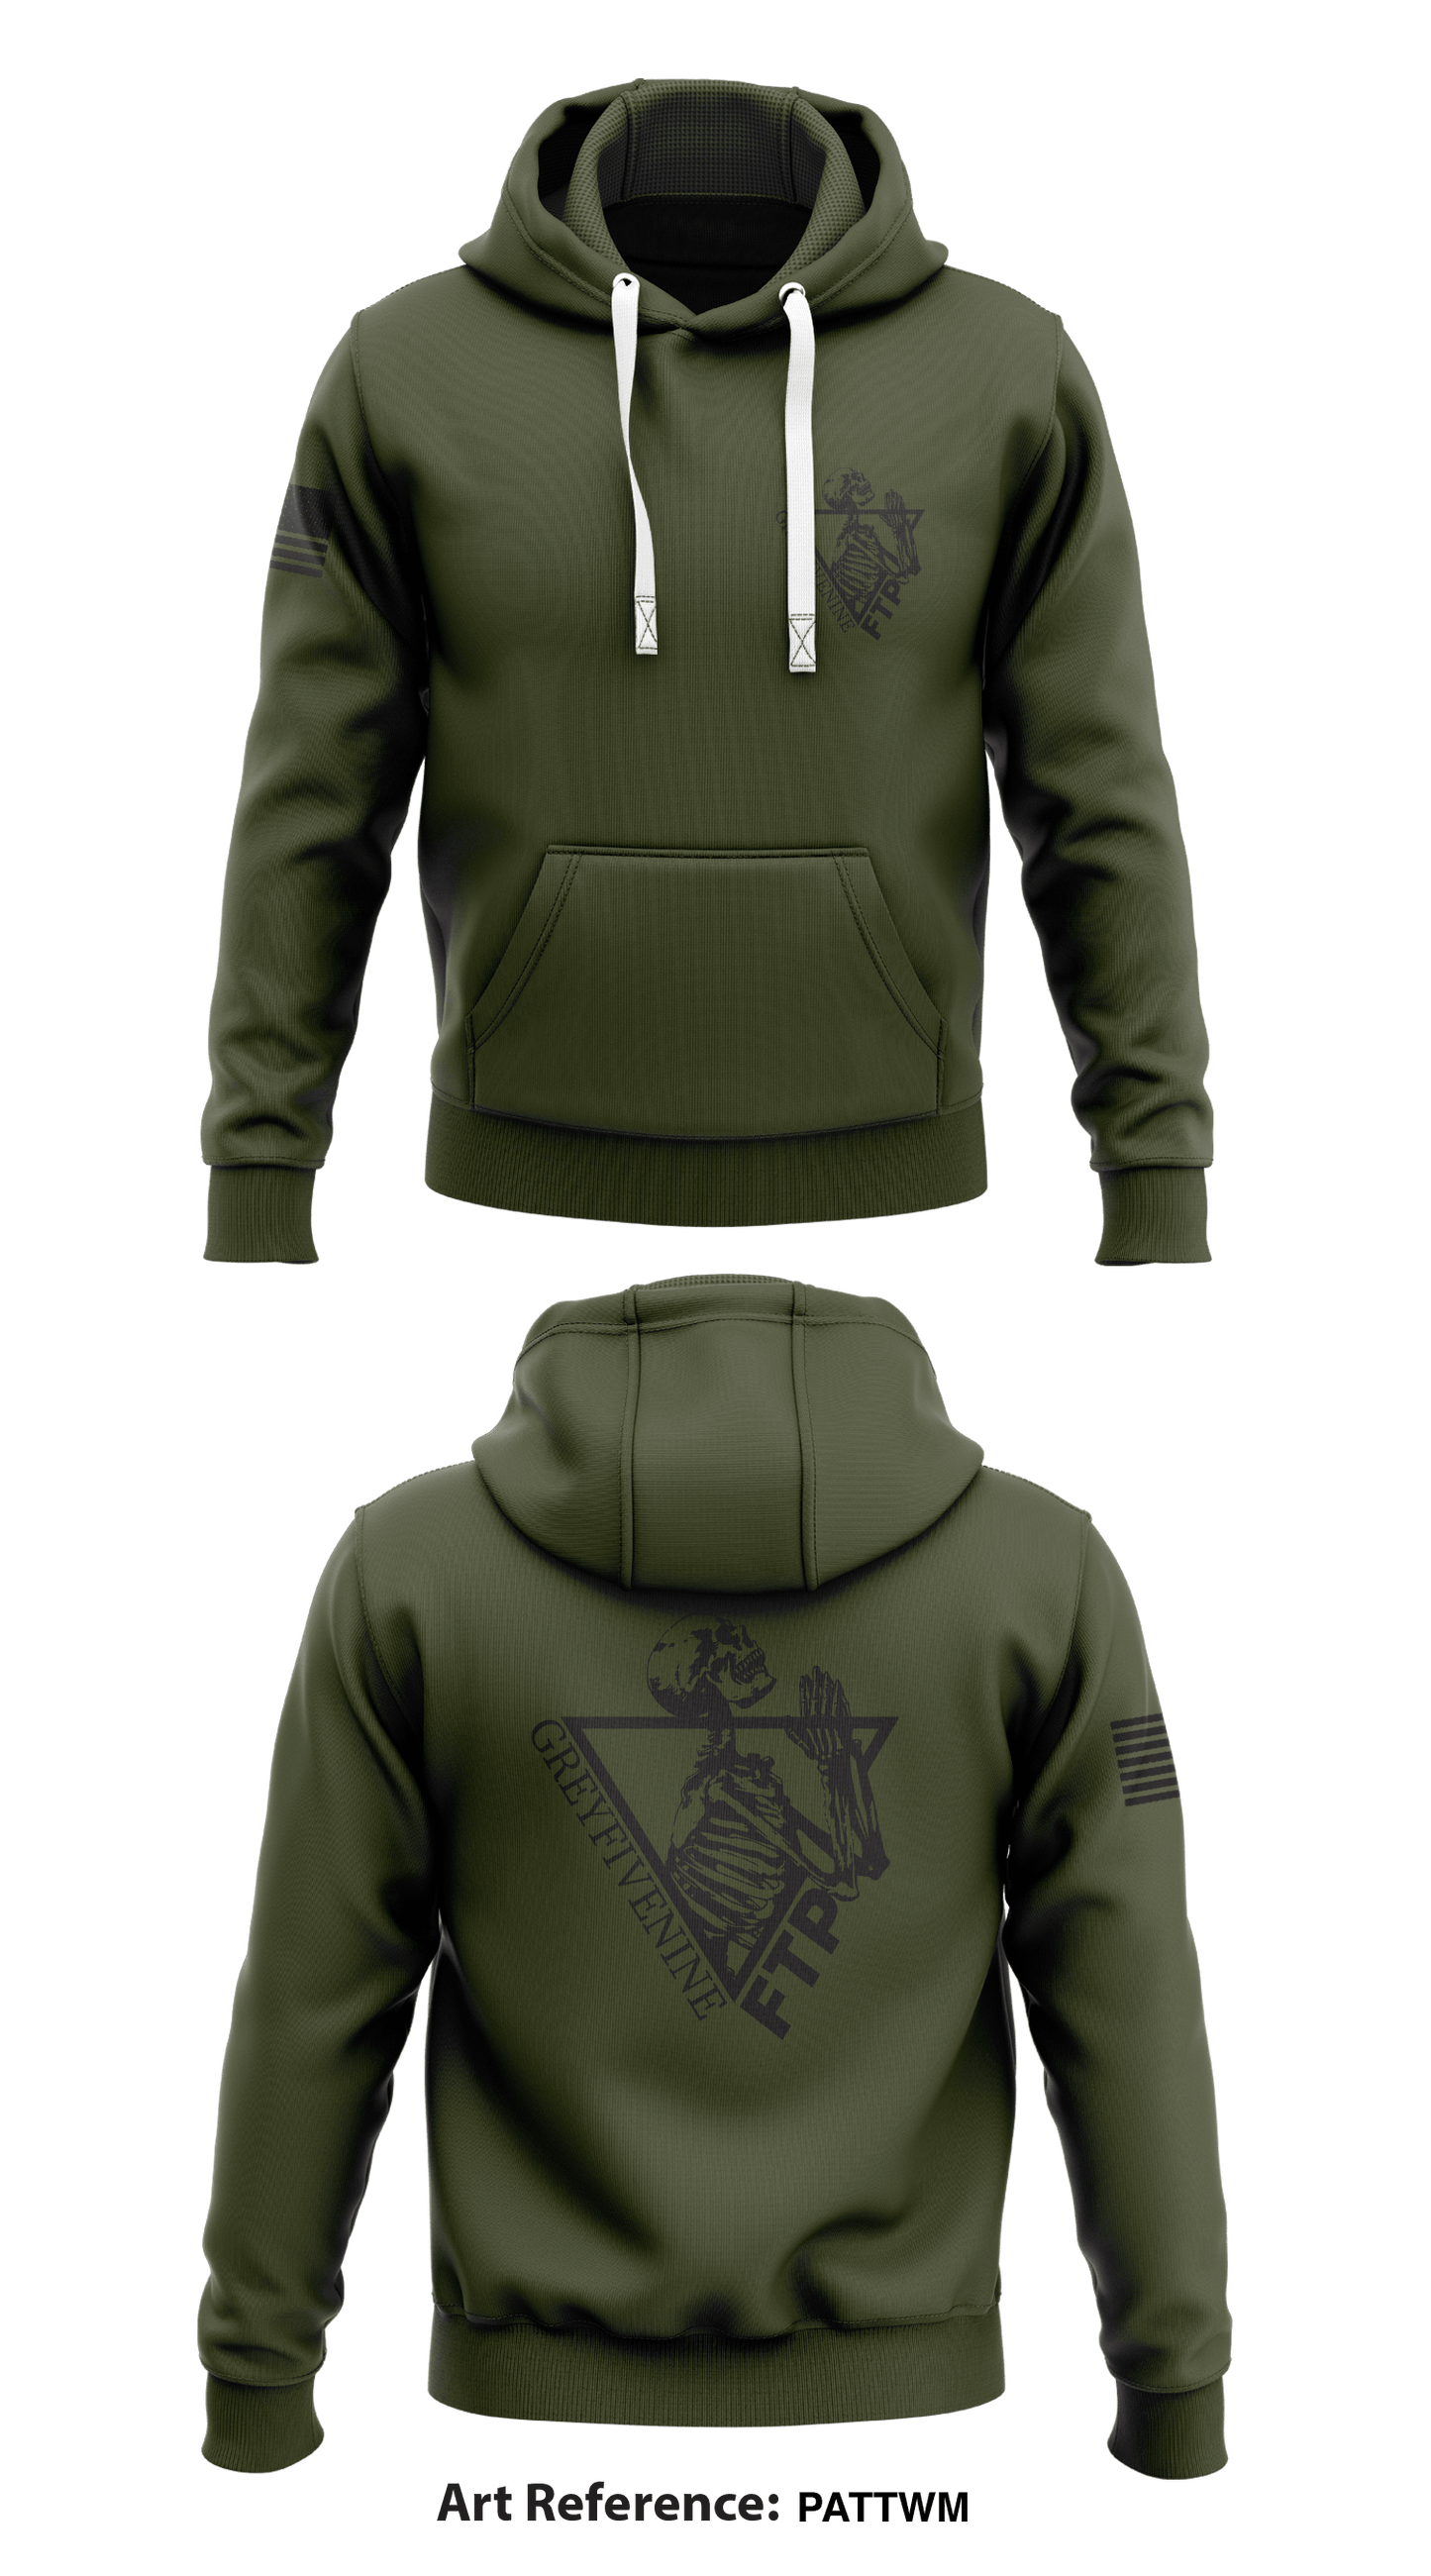 Athletic Core Store Alpha Men\'s Sweatshirt - Hooded Emblem Performance pAttwm 2 –